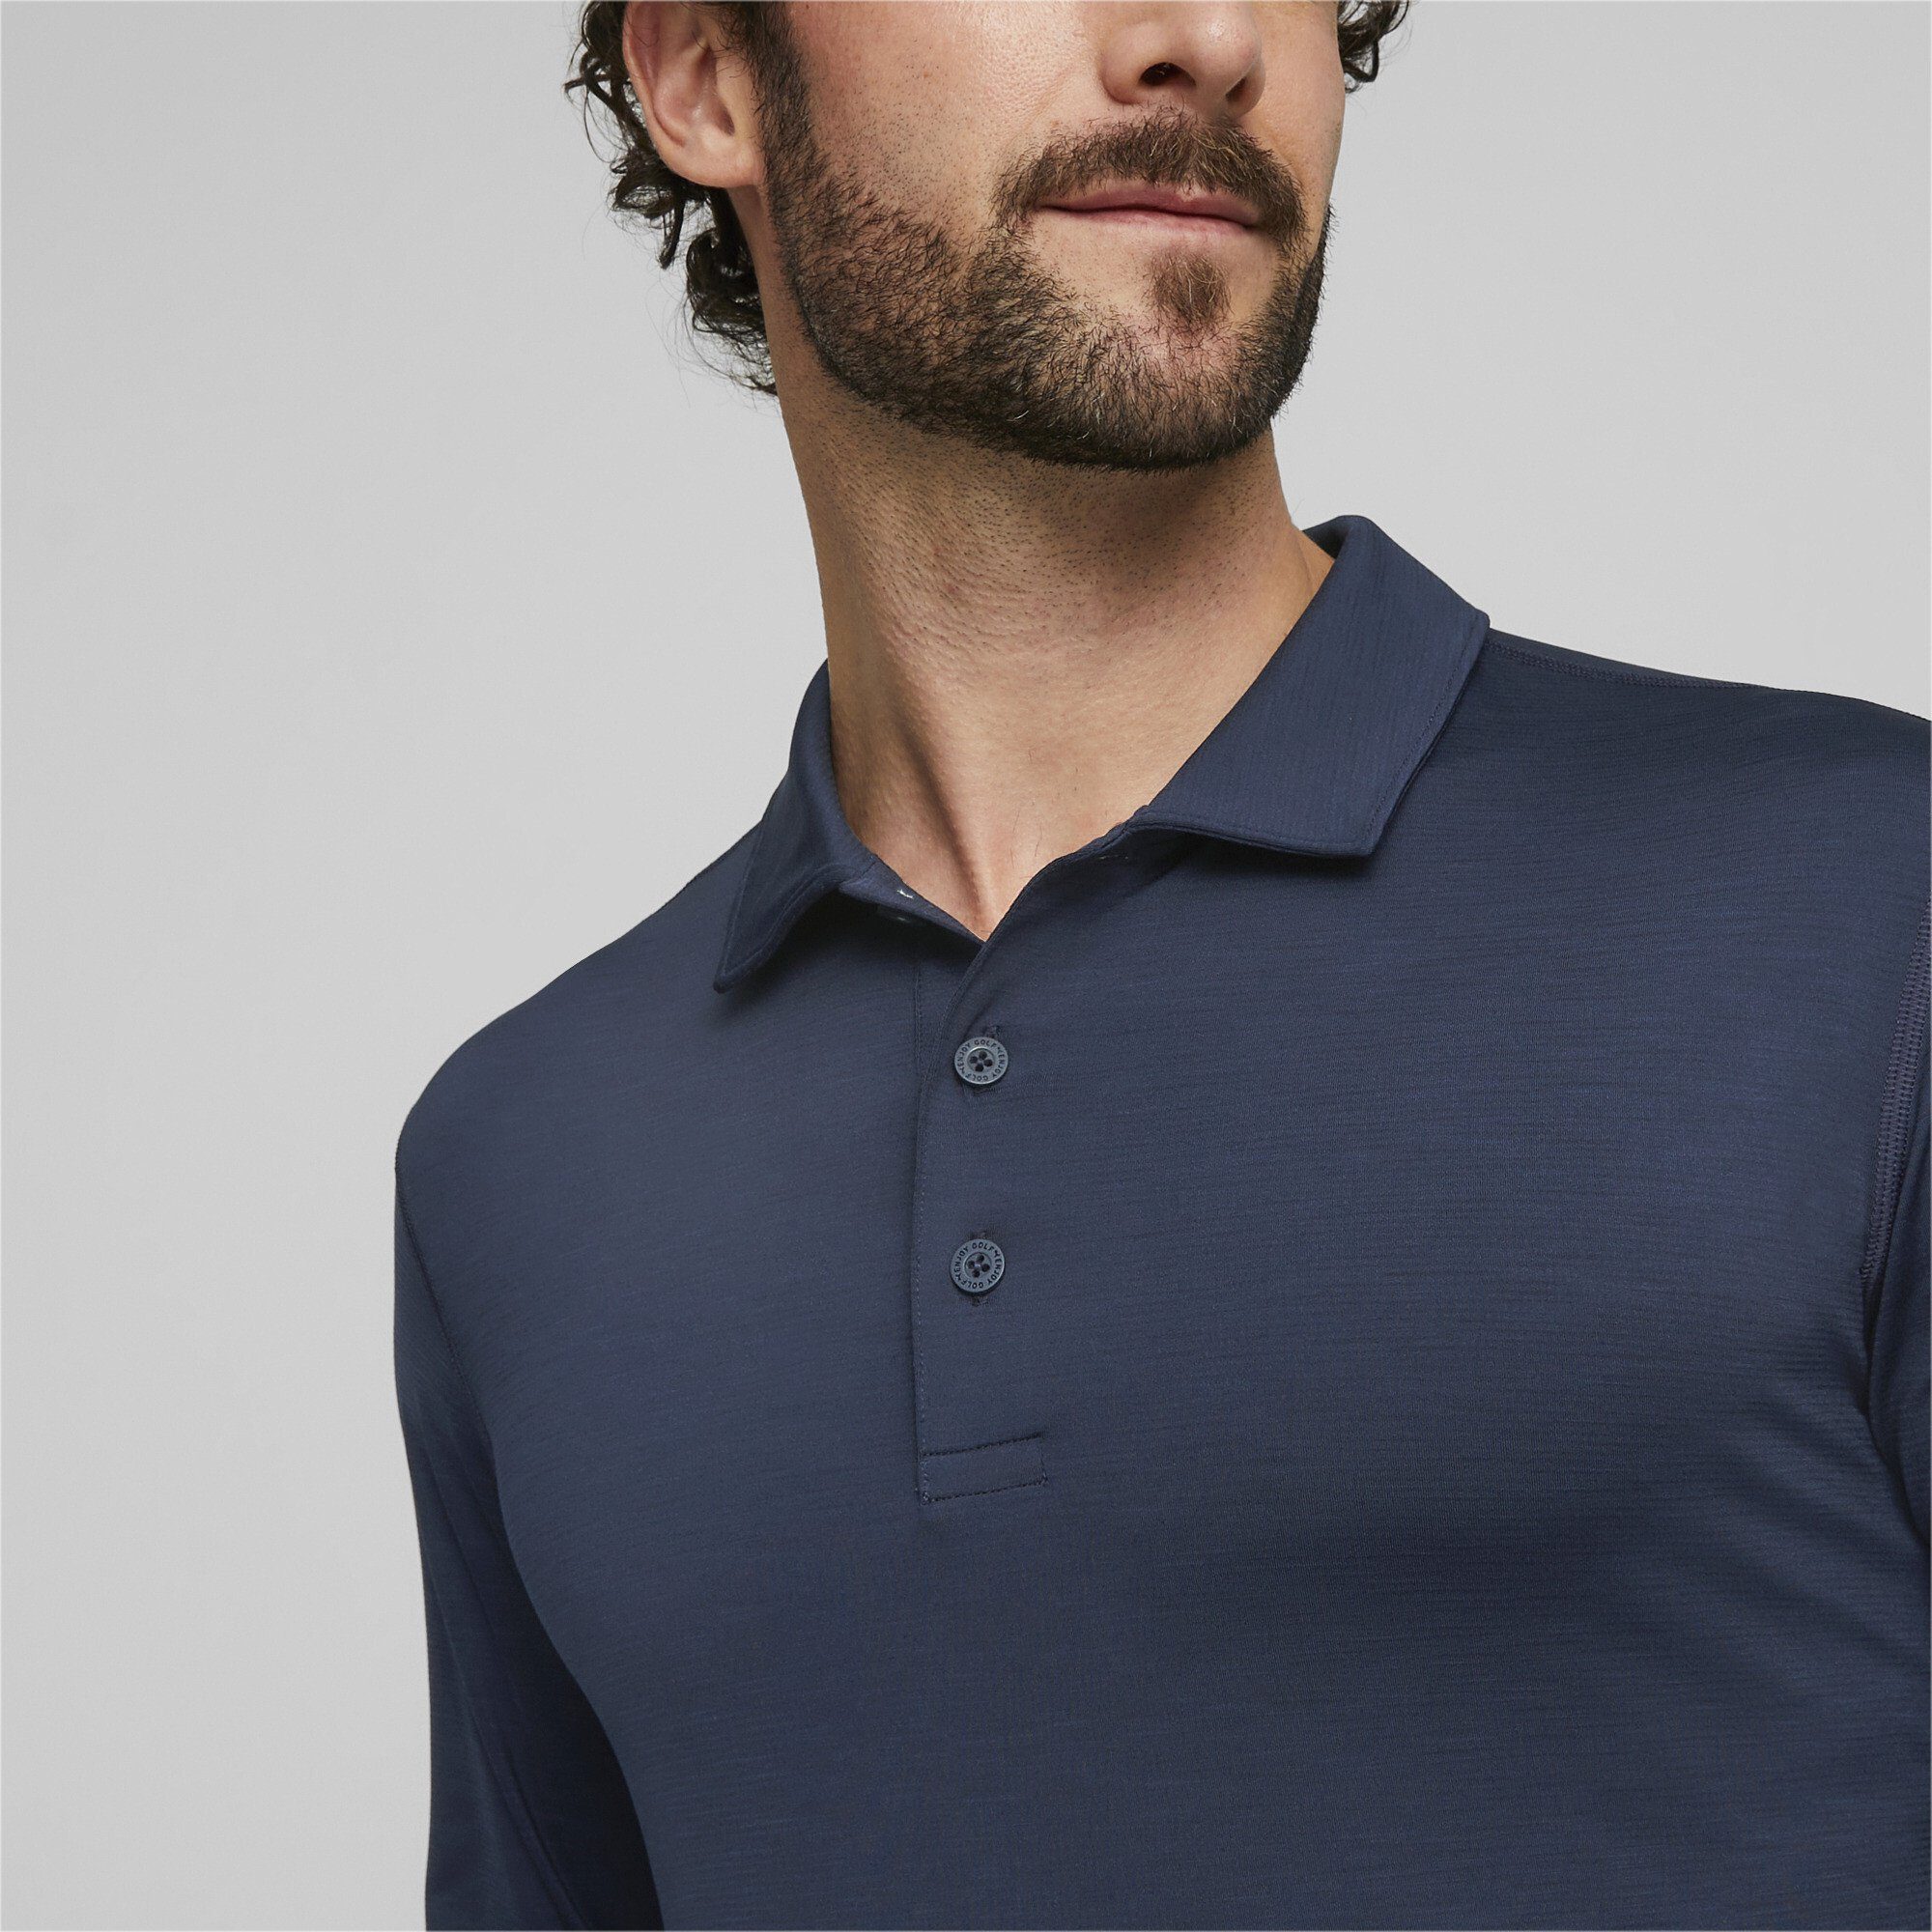 Long Poloshirt Sleeve Golfpolo Herren Blazer Navy PUMA Blue YouV